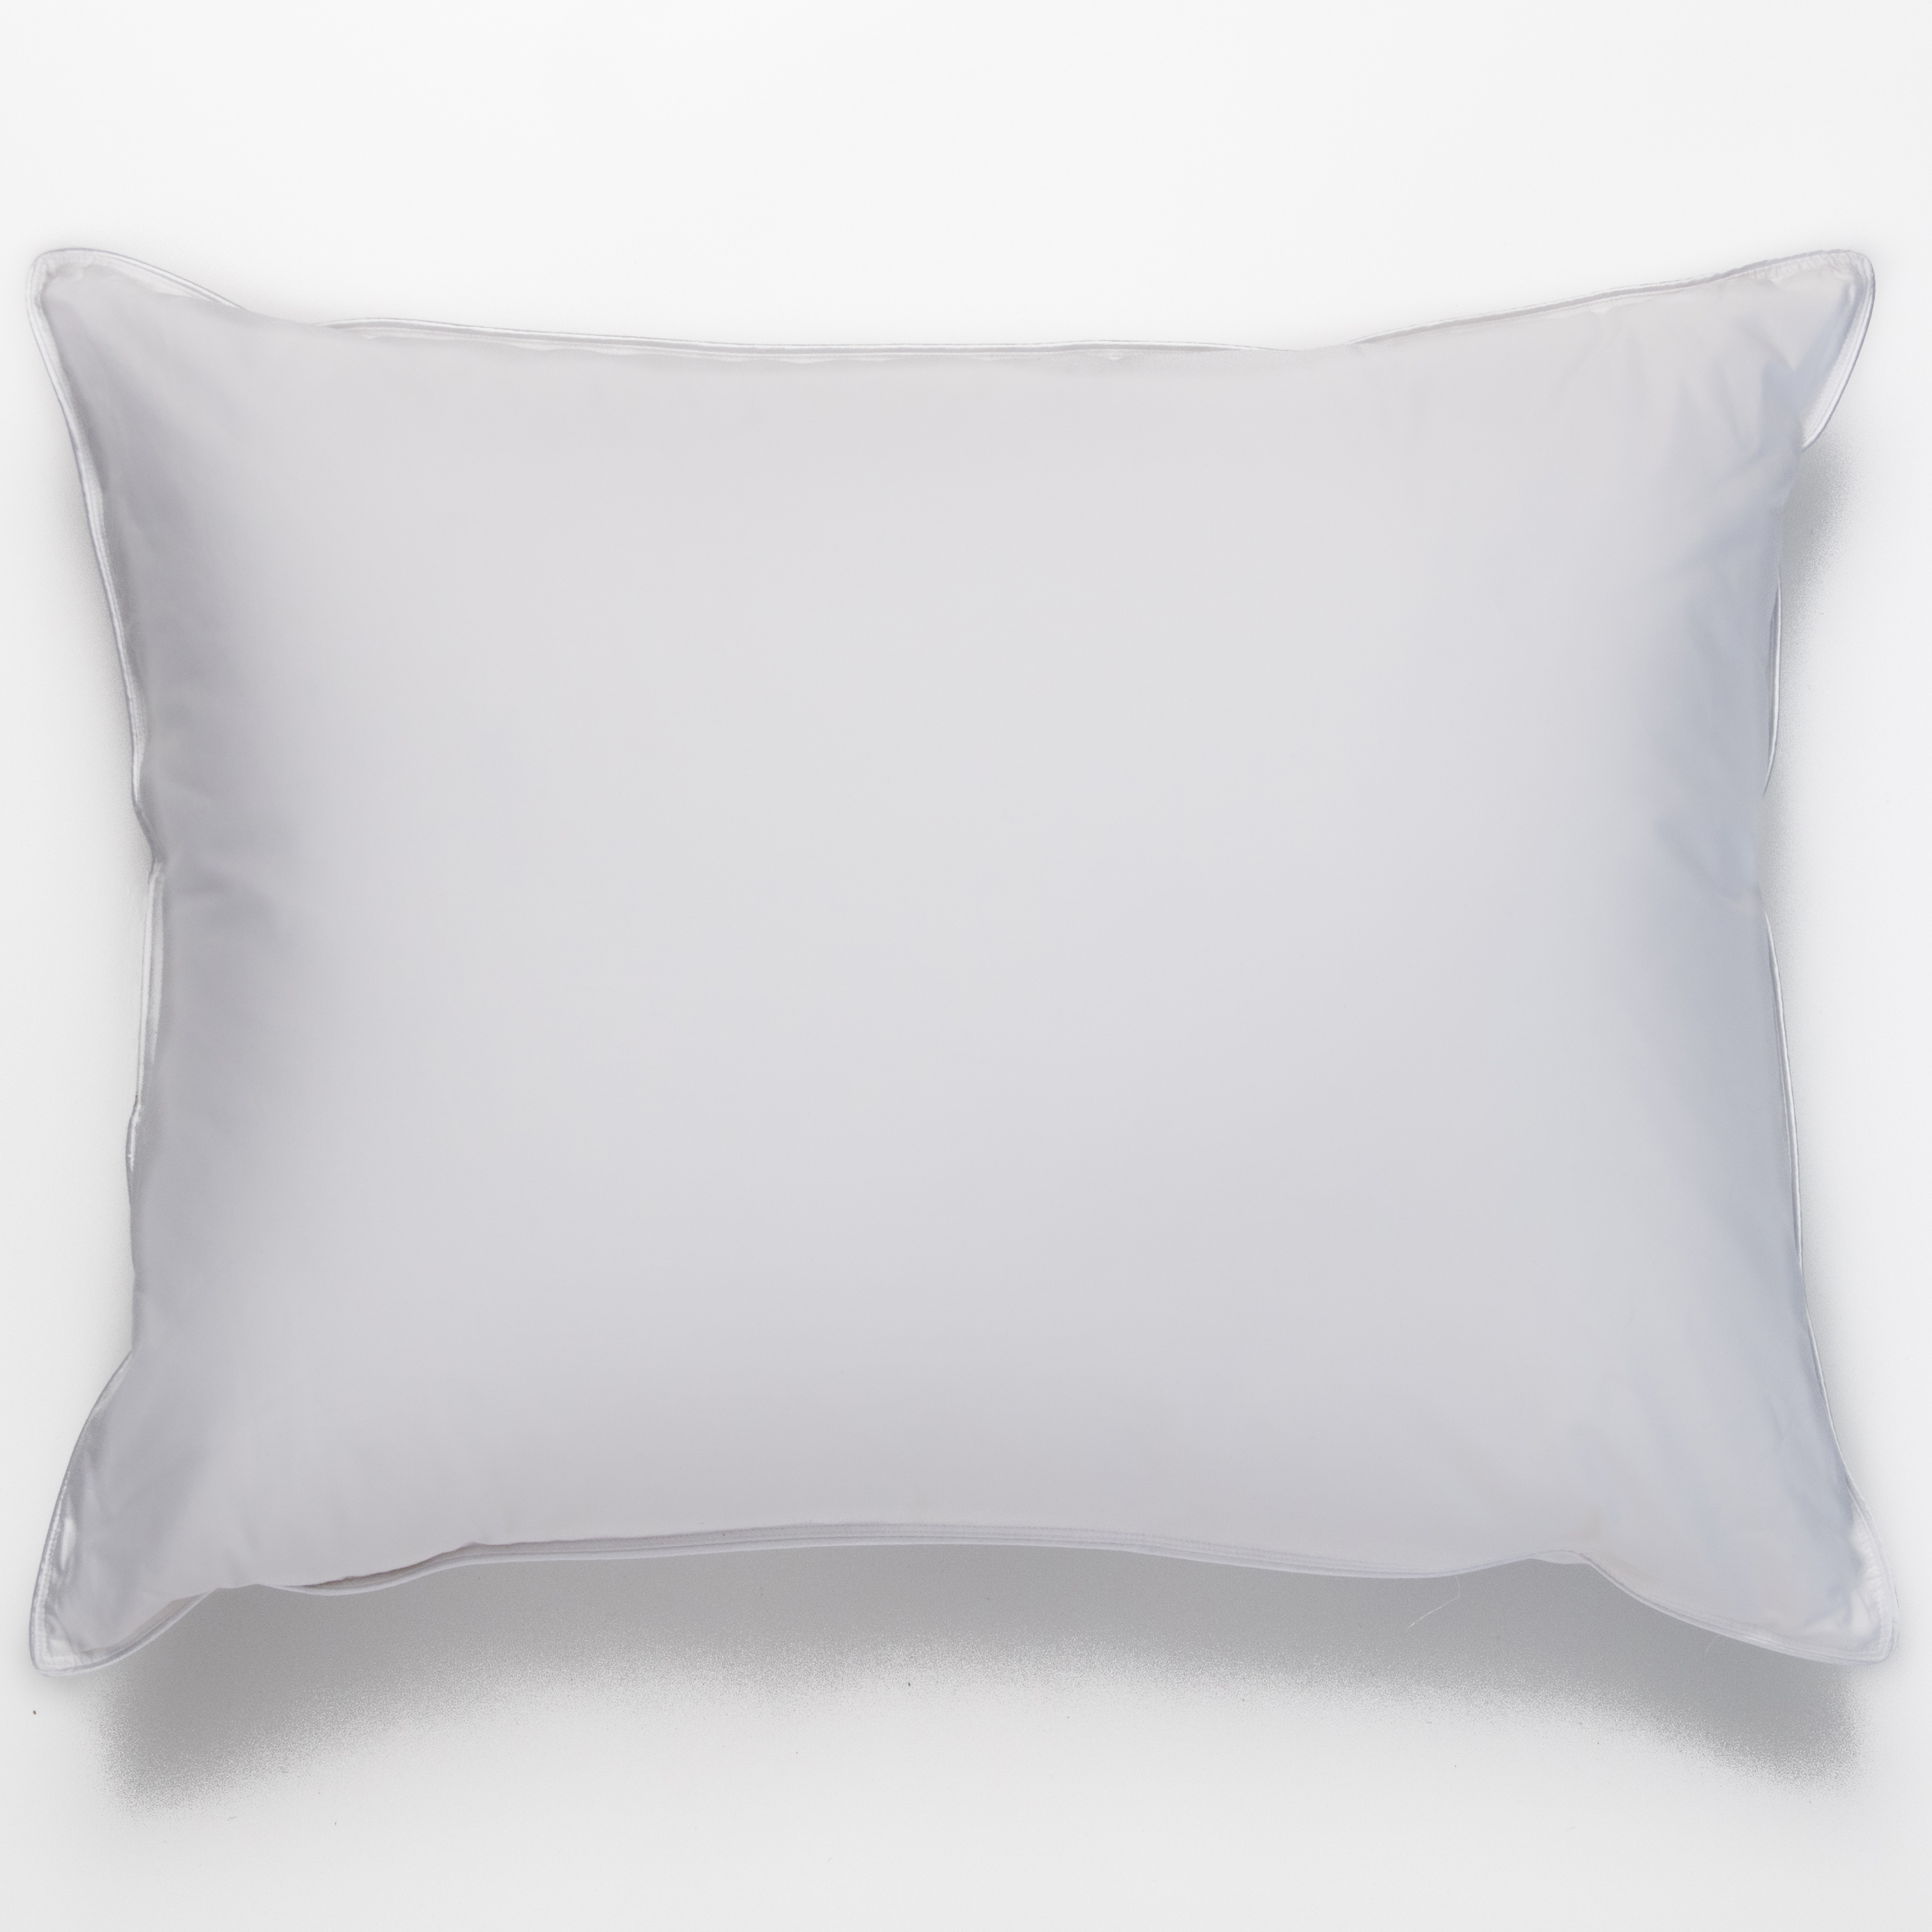 https://www.finelinens.com/media/catalog/product/2/3/236936___Decorative_Hypodown_Pillow_1.jpg